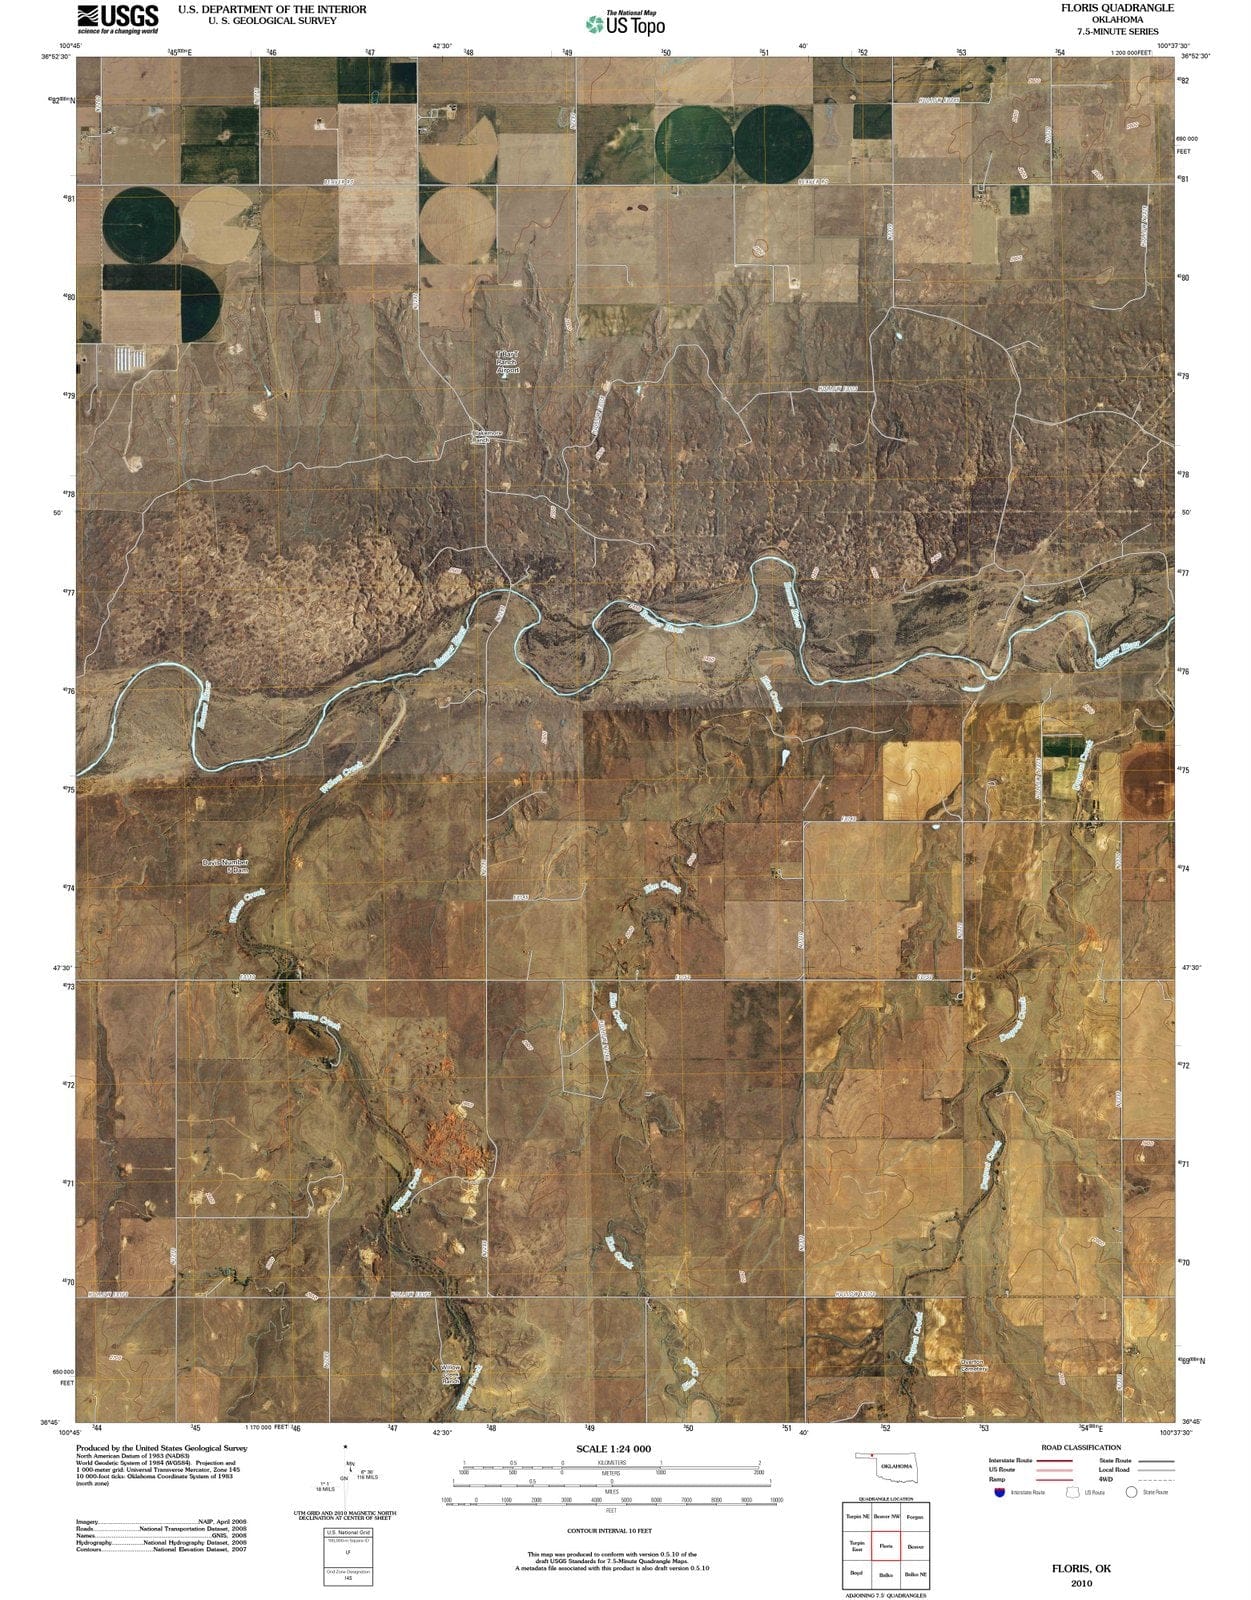 2010 Floris, OK - Oklahoma - USGS Topographic Map